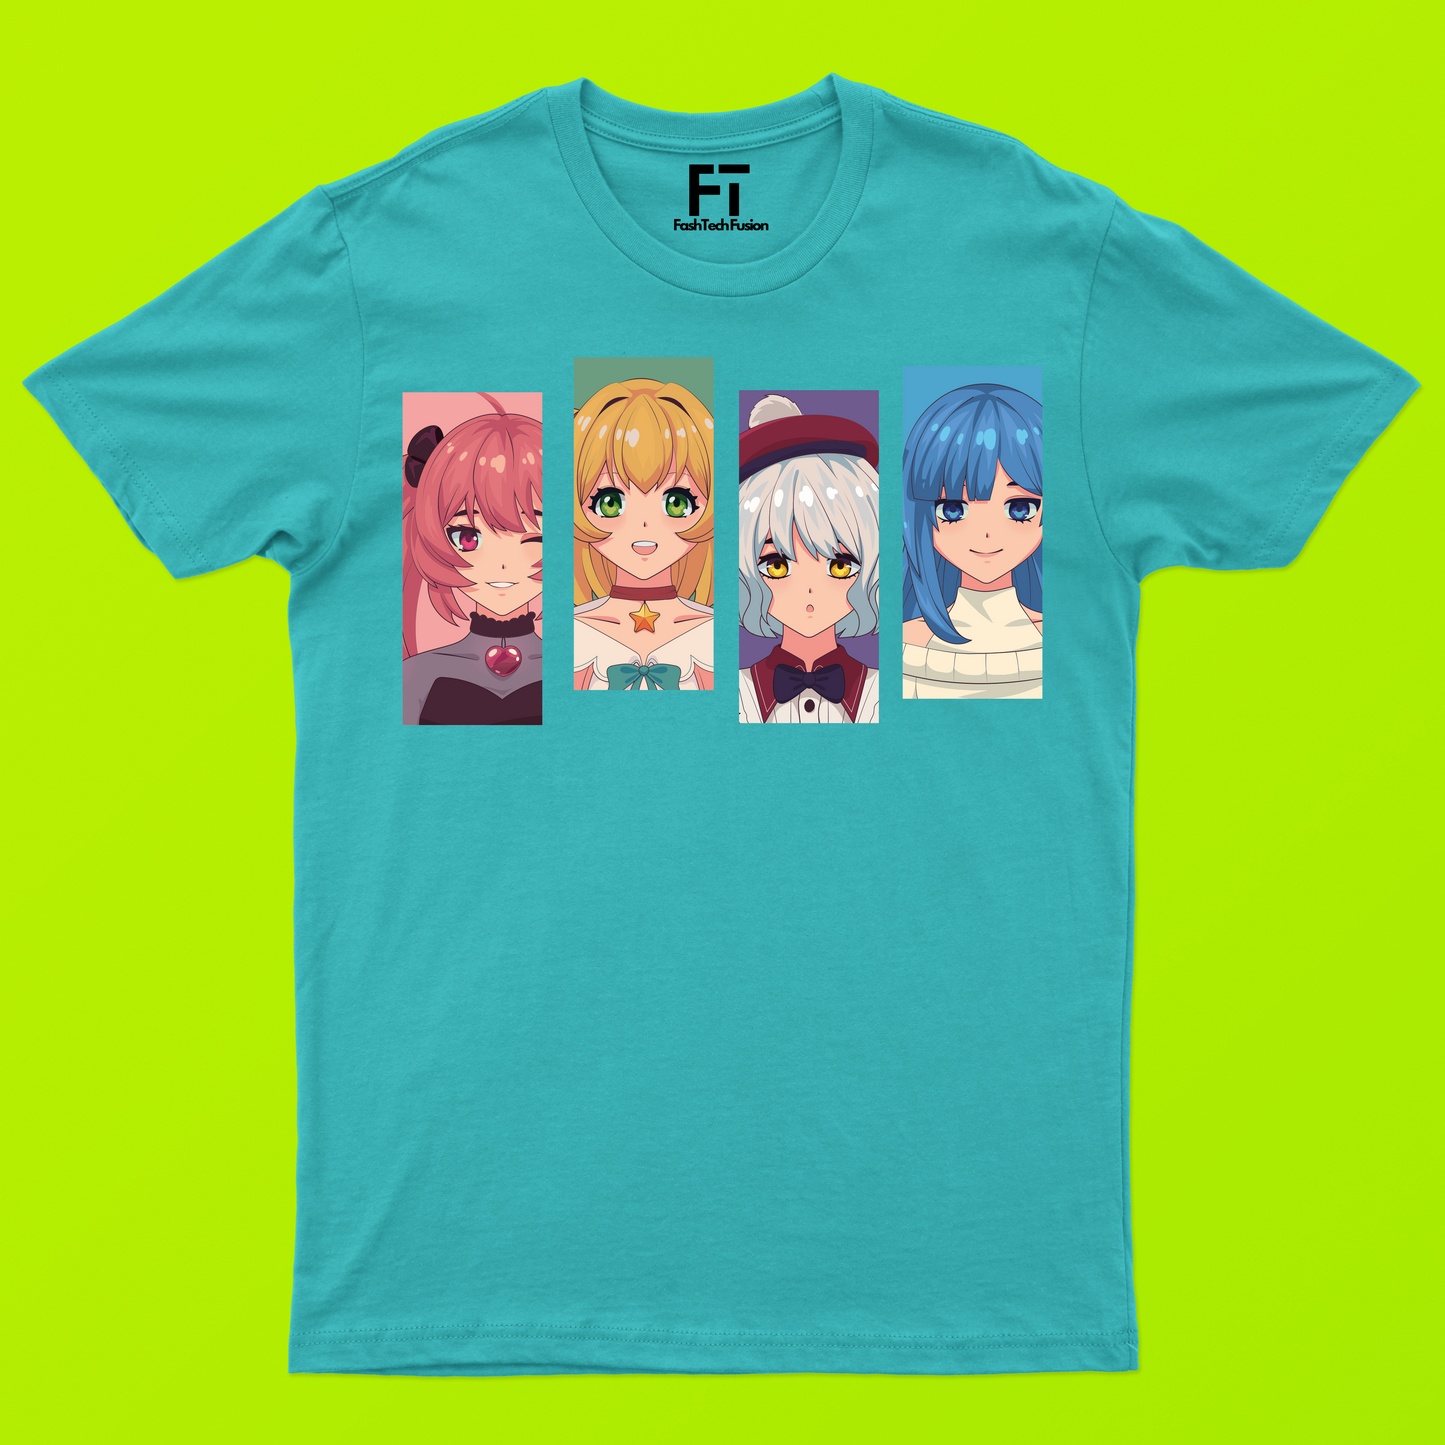 Anime girl squad